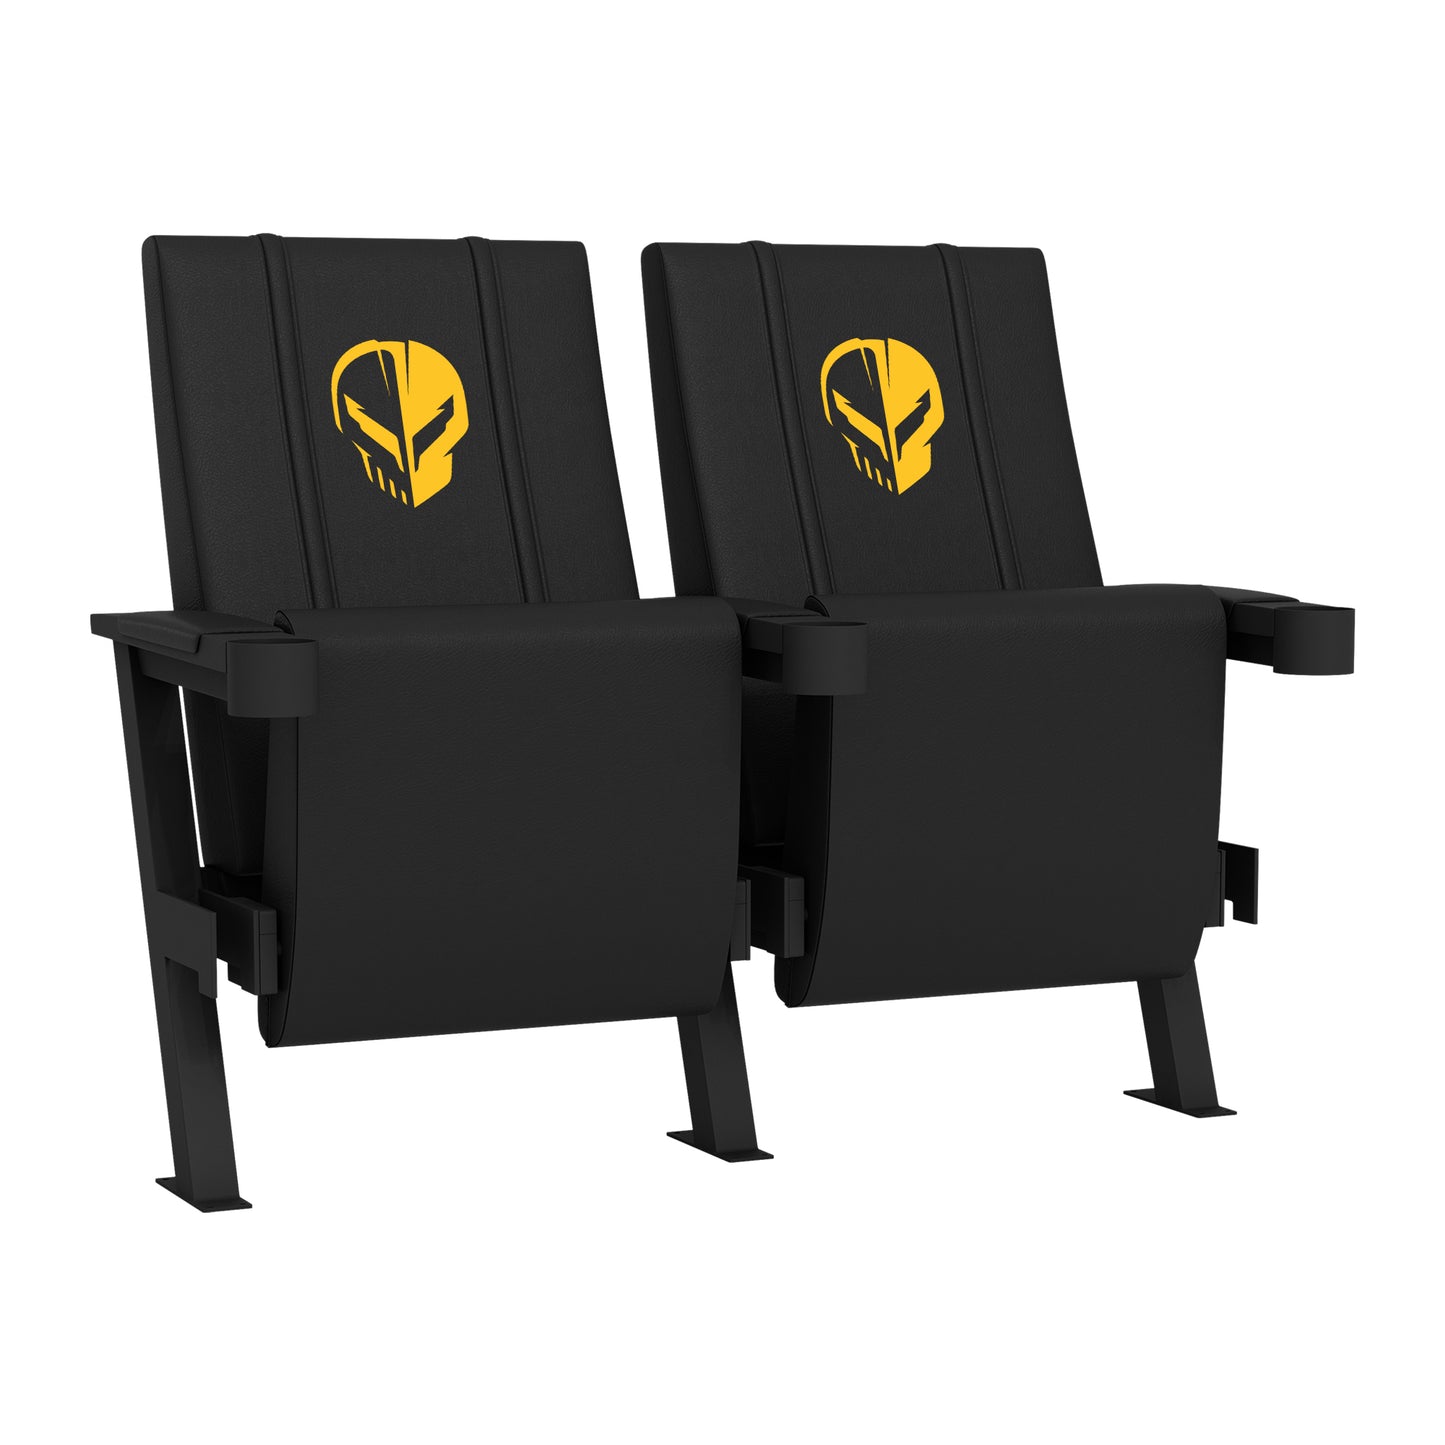 SuiteMax 3.5 VIP Seats with Corvette Jake Symbol Yellow Logo